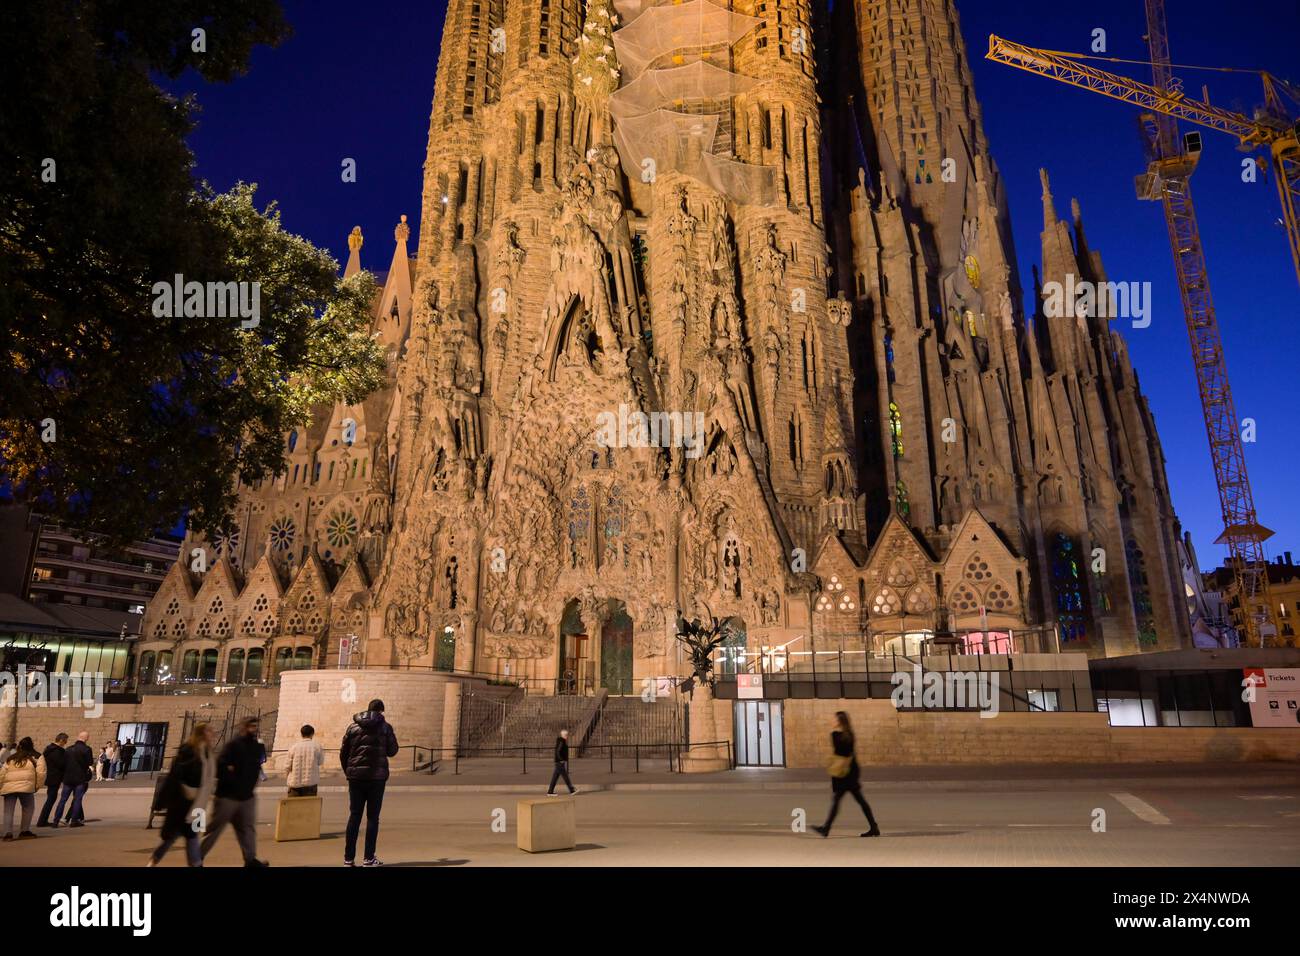 Fassade der Geburt, Sagrada Familia, Basilika von Antoni Gaudi, Barcelona, Katalonien, Spanien Stockfoto